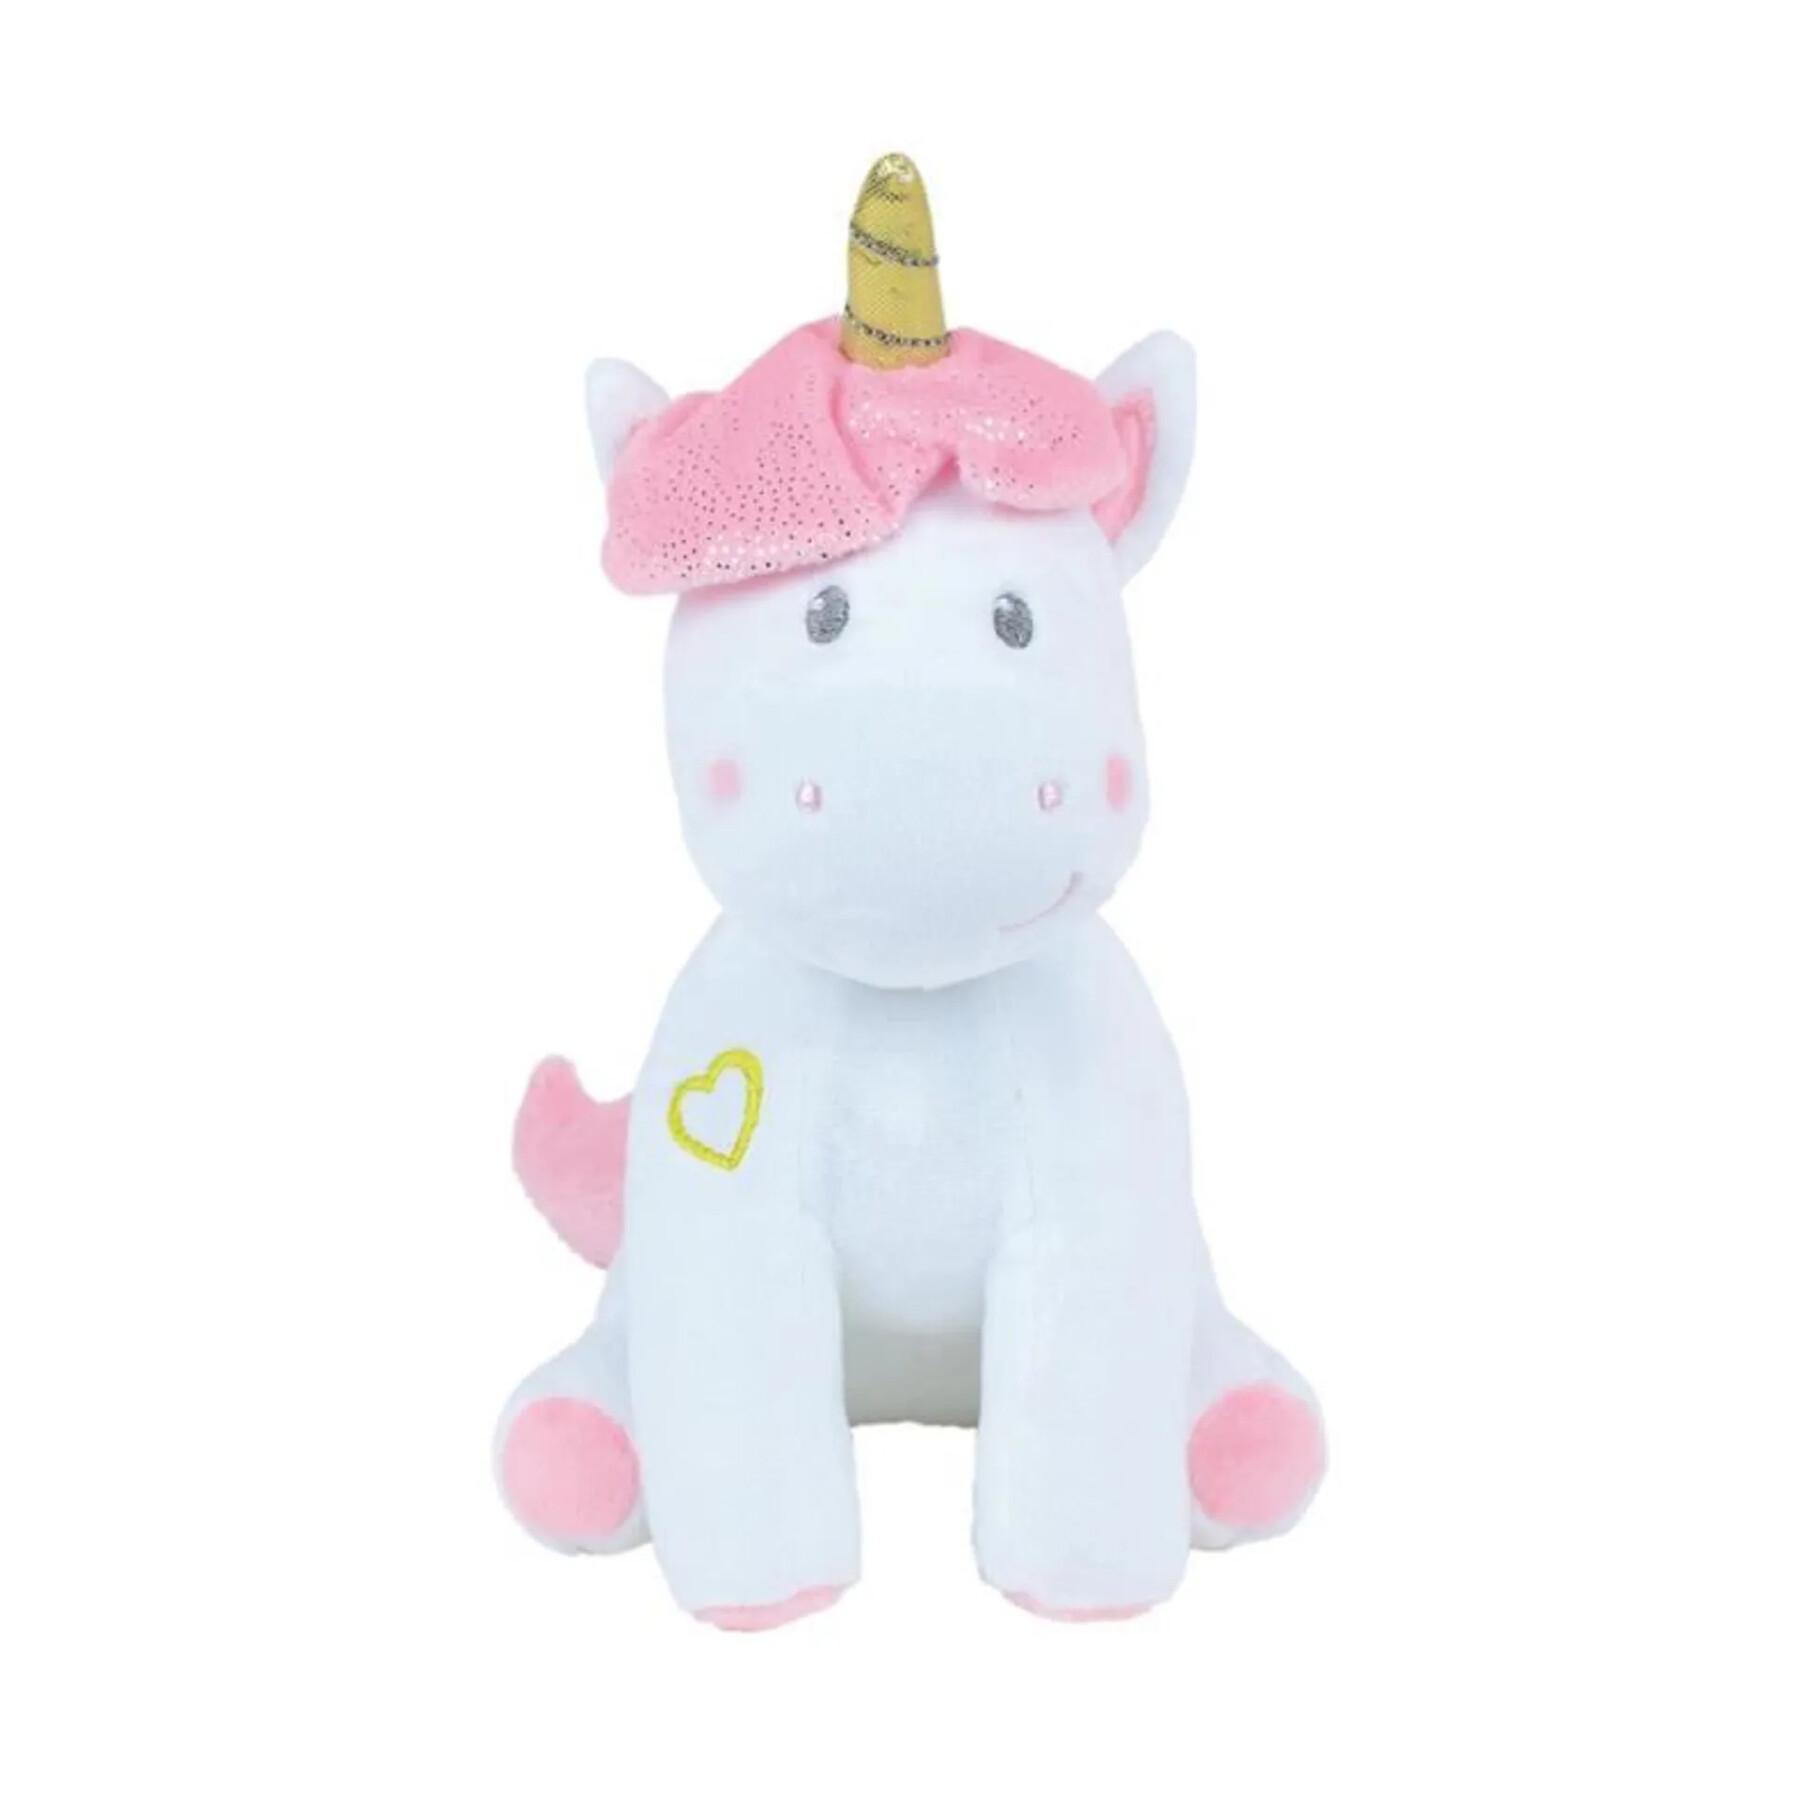 Musical light-up unicorn plush Jemini